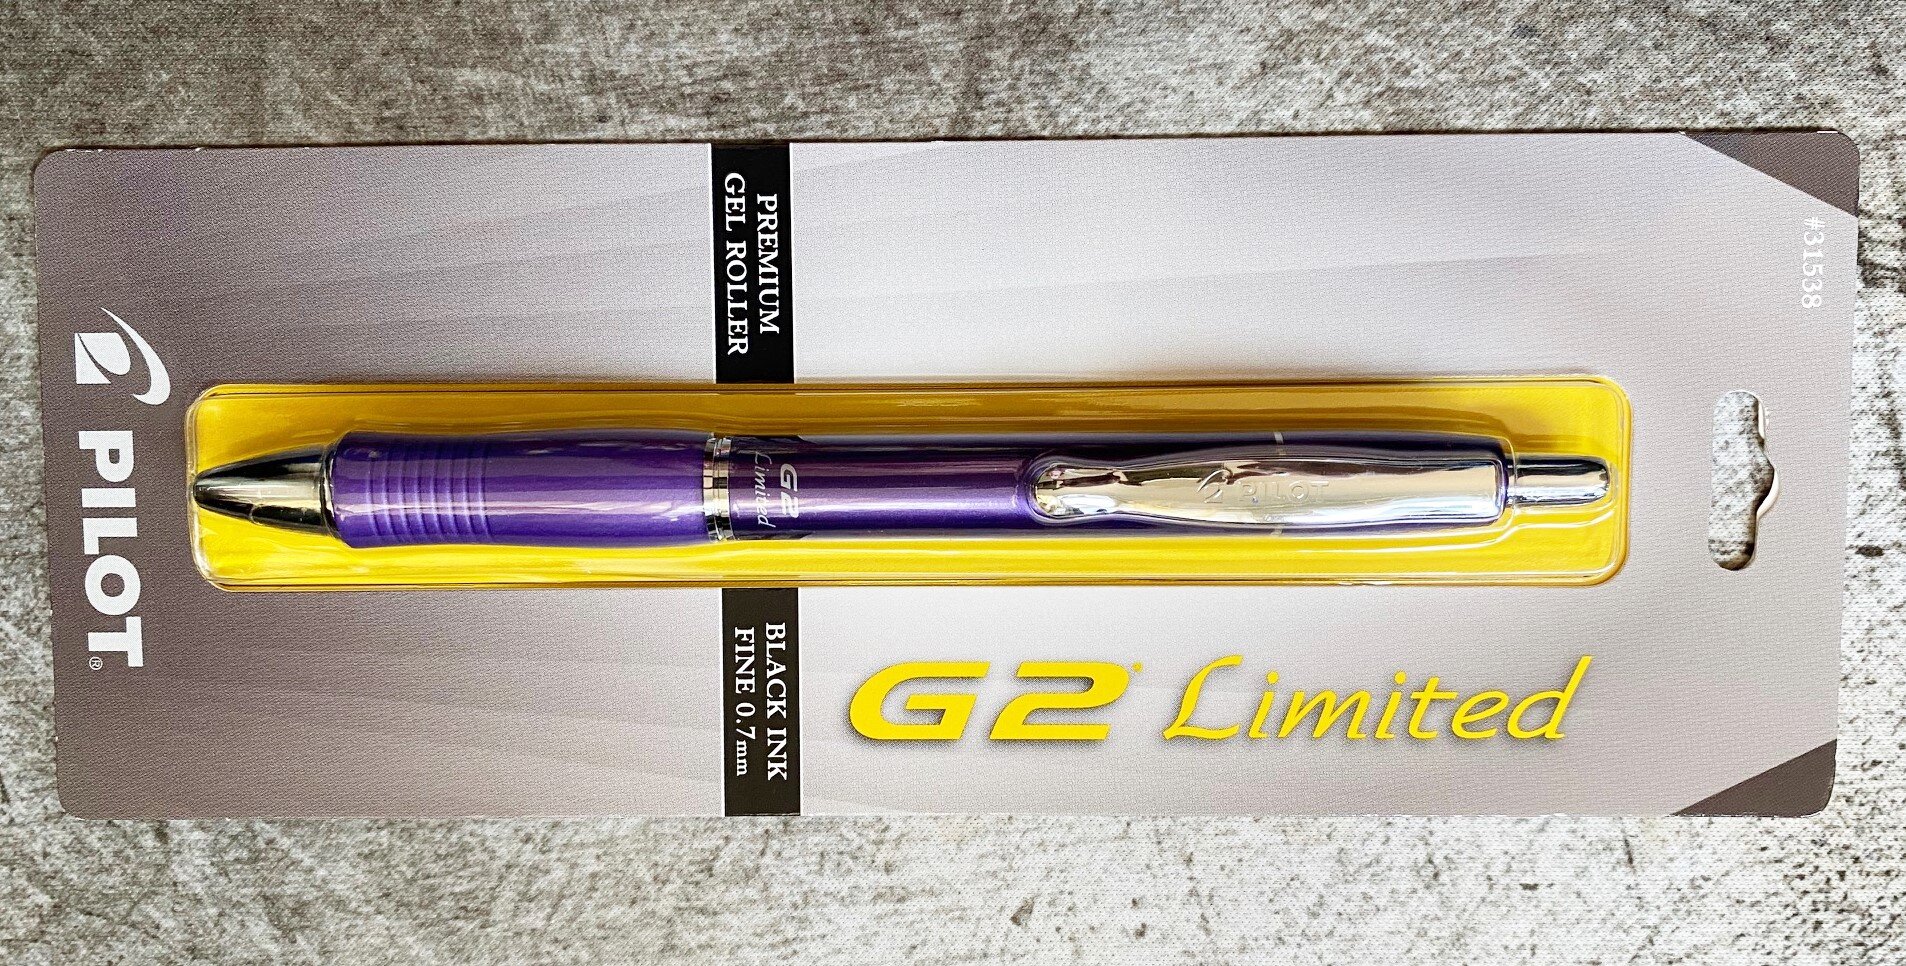 Pilot 18ct G2 Gel Pens Fine Point 0.7mm Assorted Inks : Target